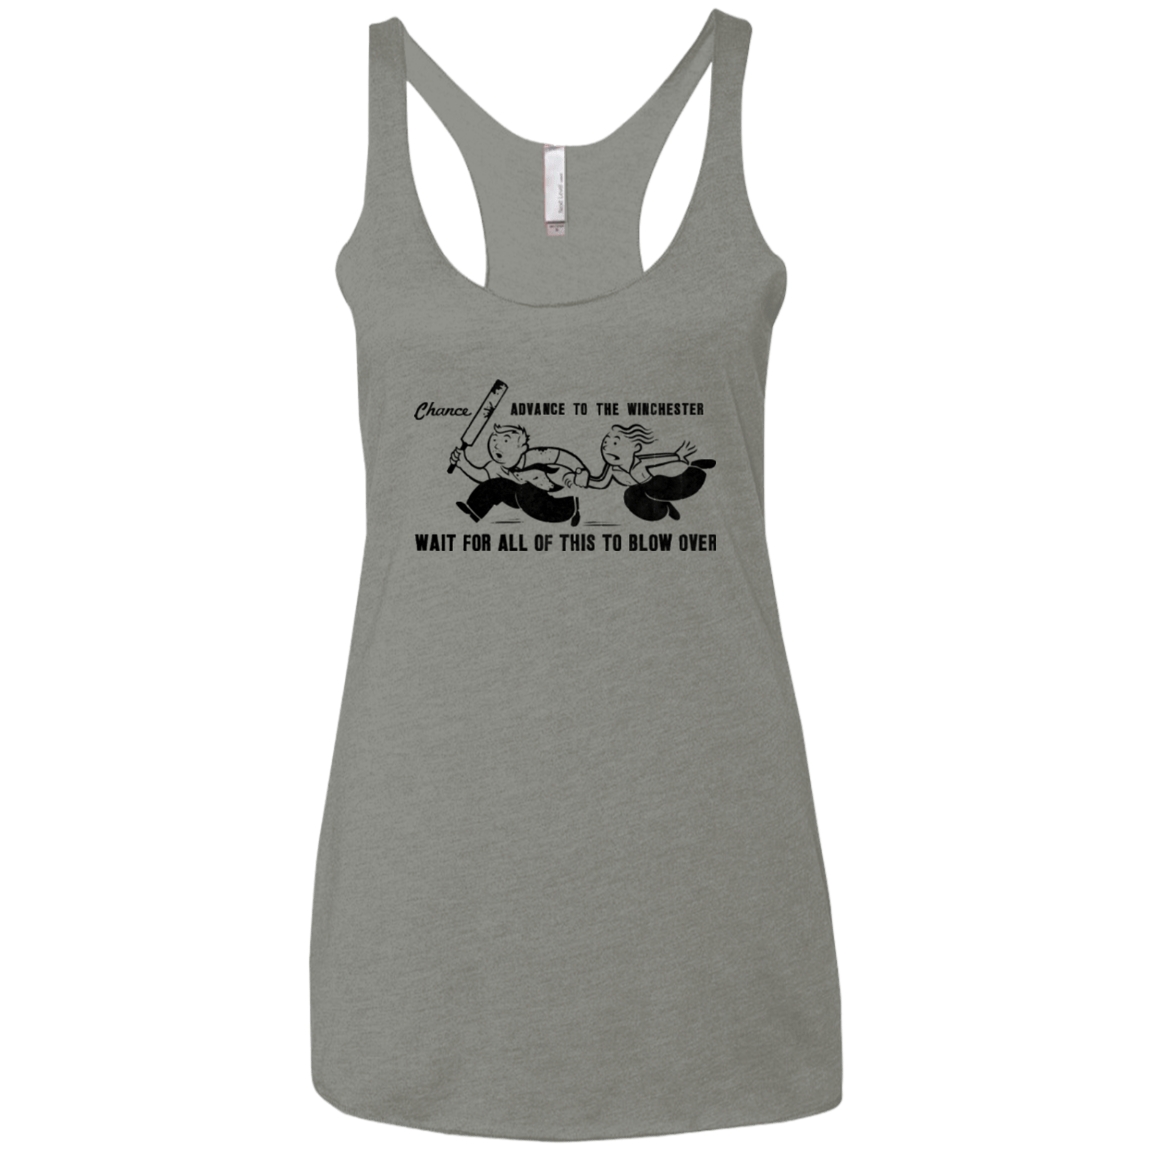 T-Shirts Venetian Grey / X-Small Shauns Last Chance Women's Triblend Racerback Tank